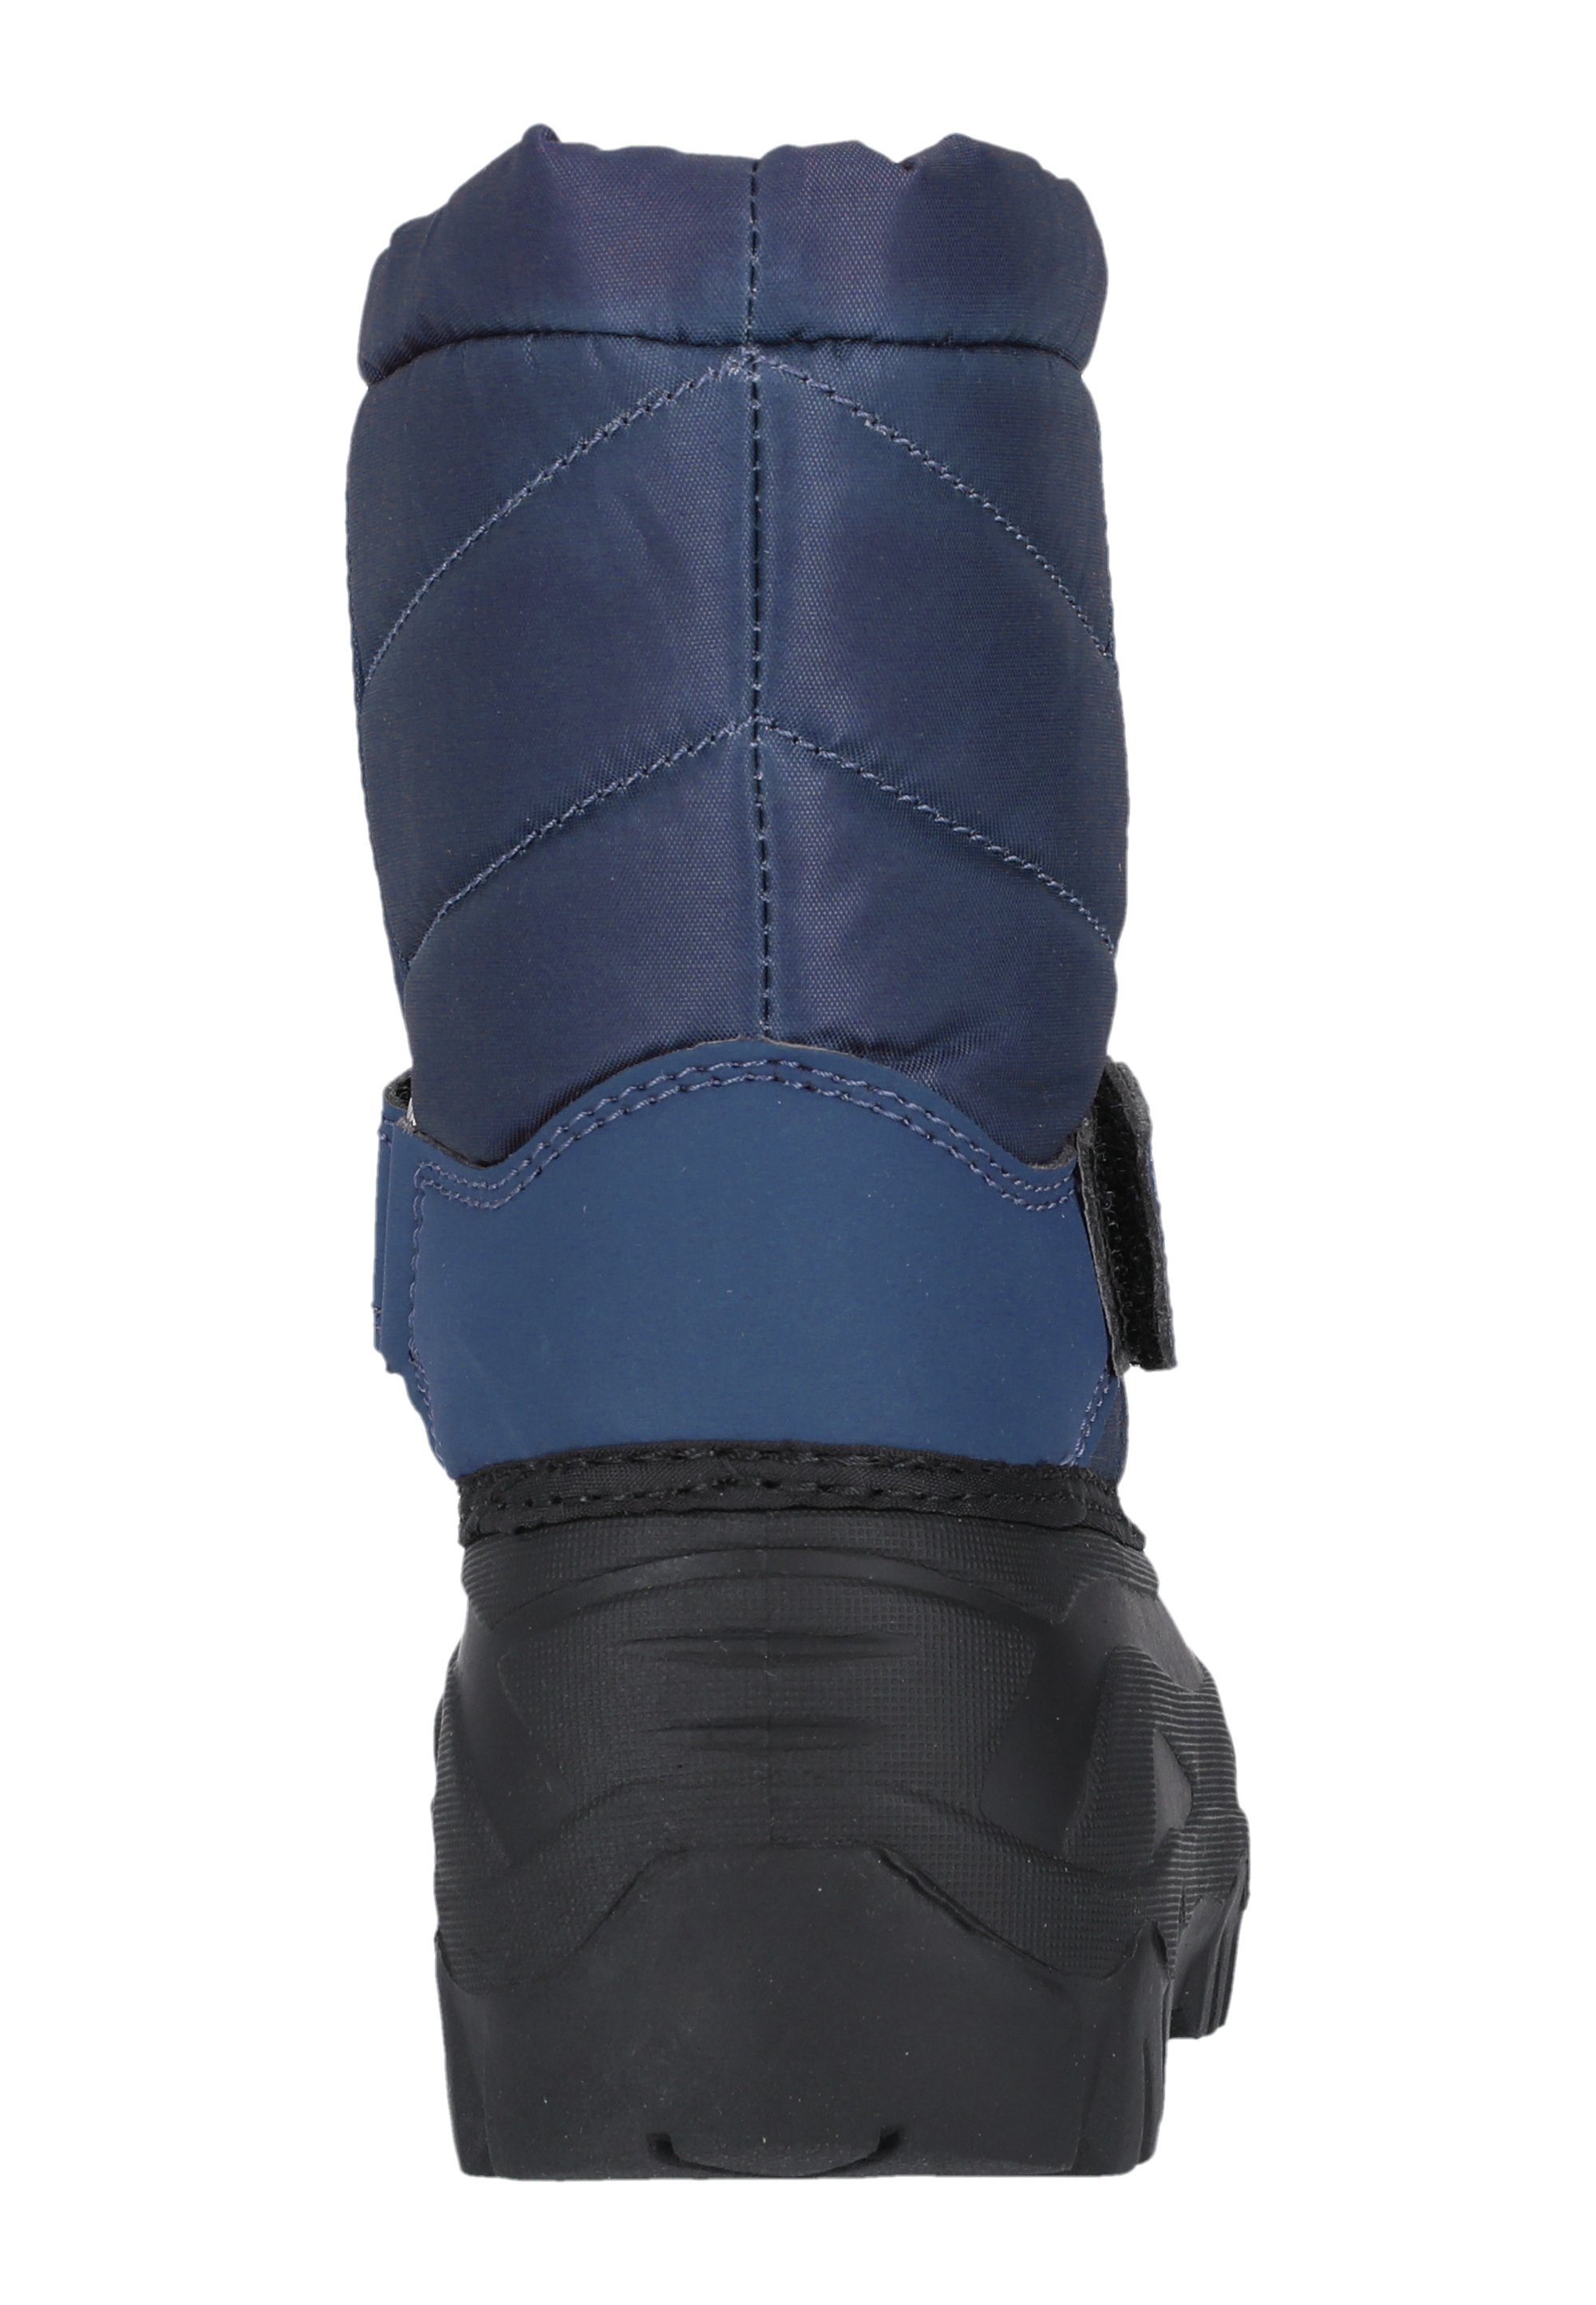 Stiefel mit strapazierfähiger Wanoha blau Sohle ZIGZAG